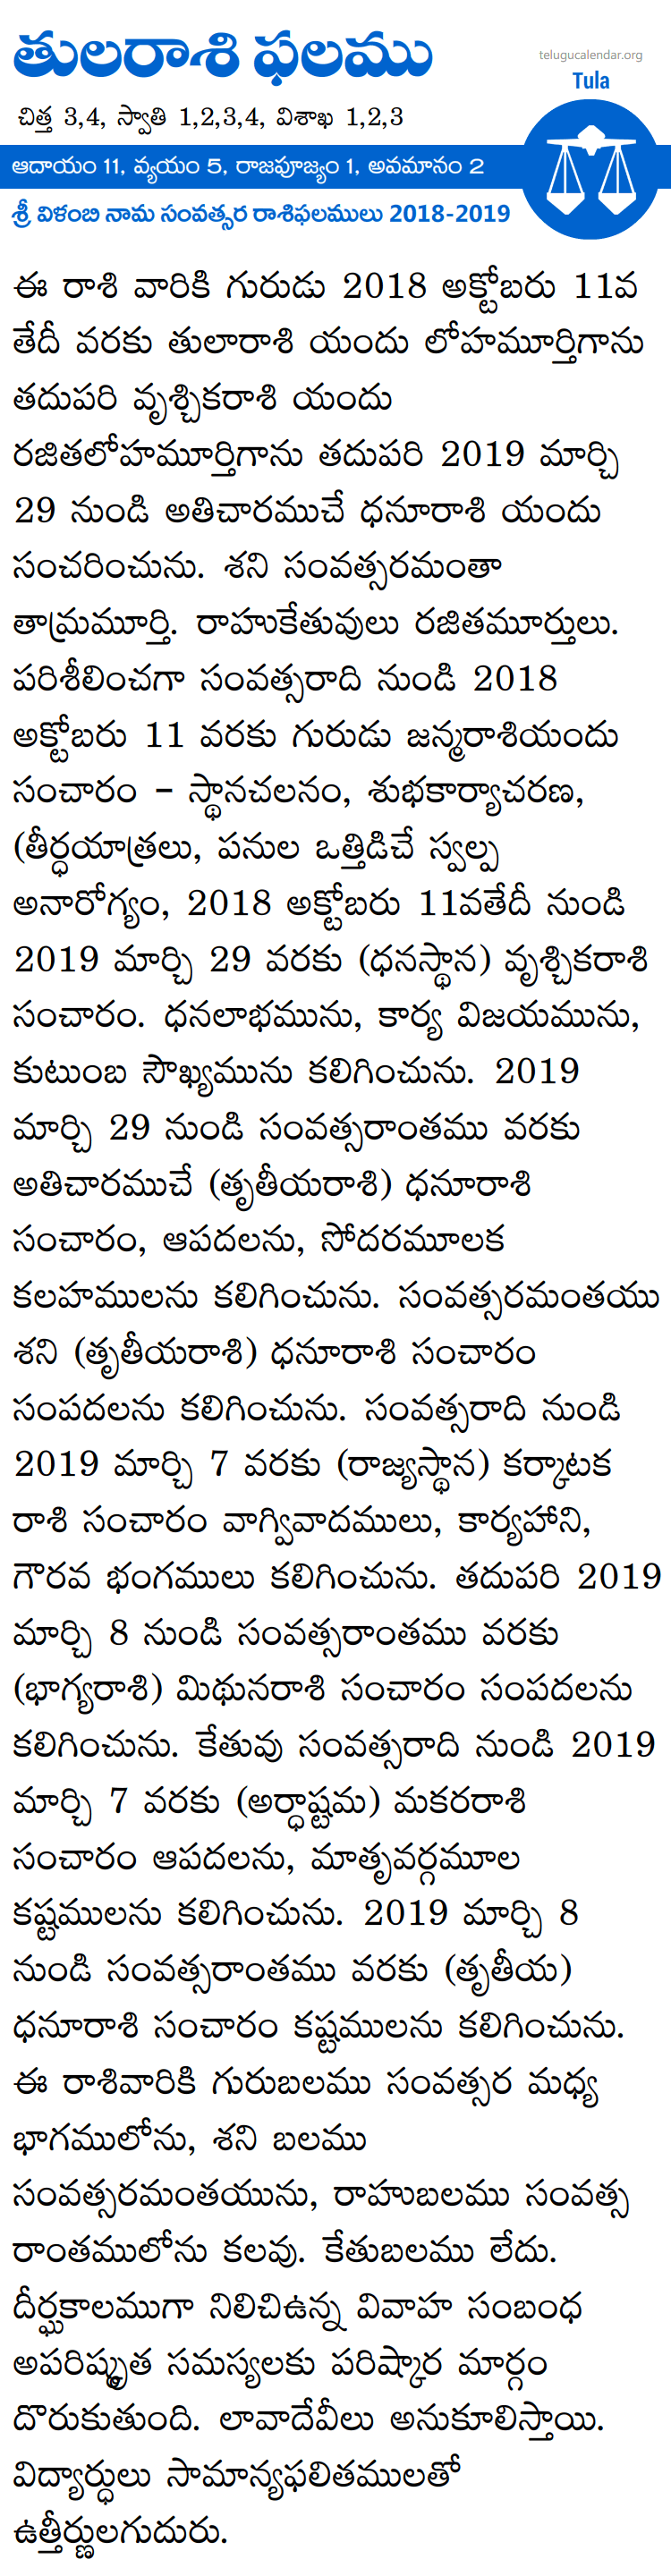 Tula Rasi Phalalu 2019-2020 Telugu